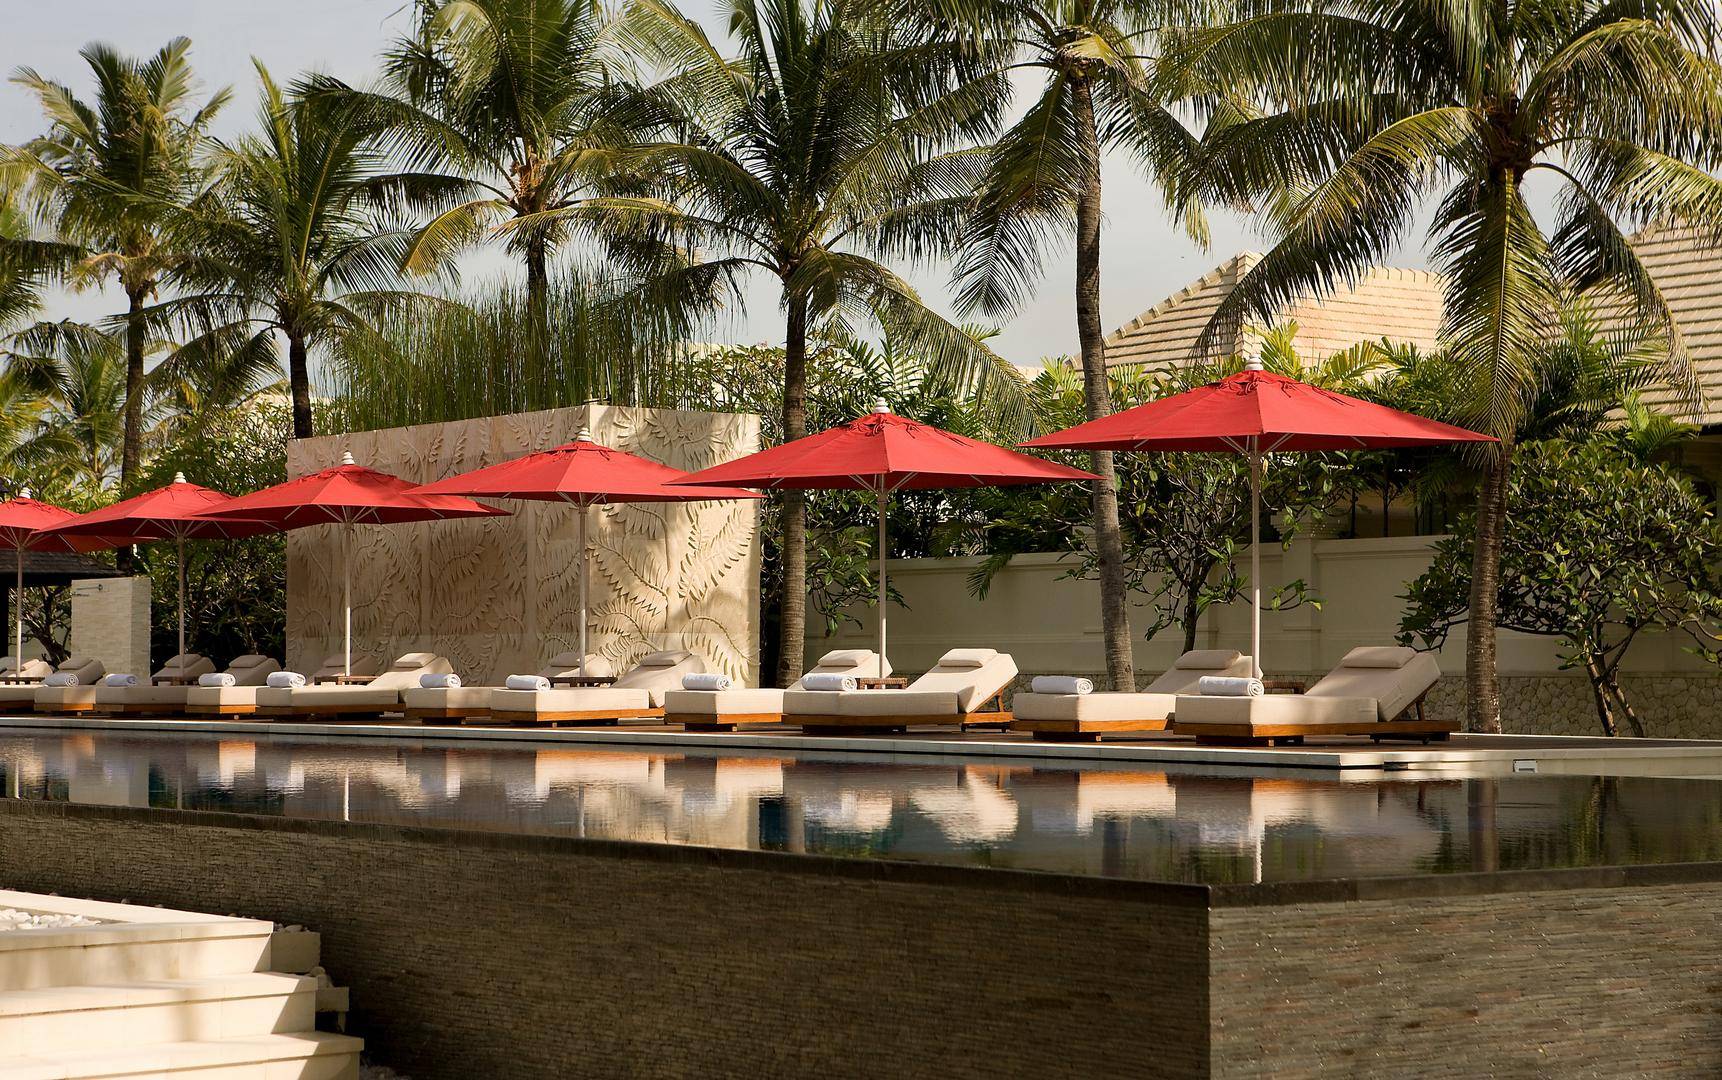 The Royal Santrian Luxury Beach Villas Роял Сантриан, лакшери Бич виллы. Бали коллекшн. Бали центр. The Royal Pita Maha 5*.